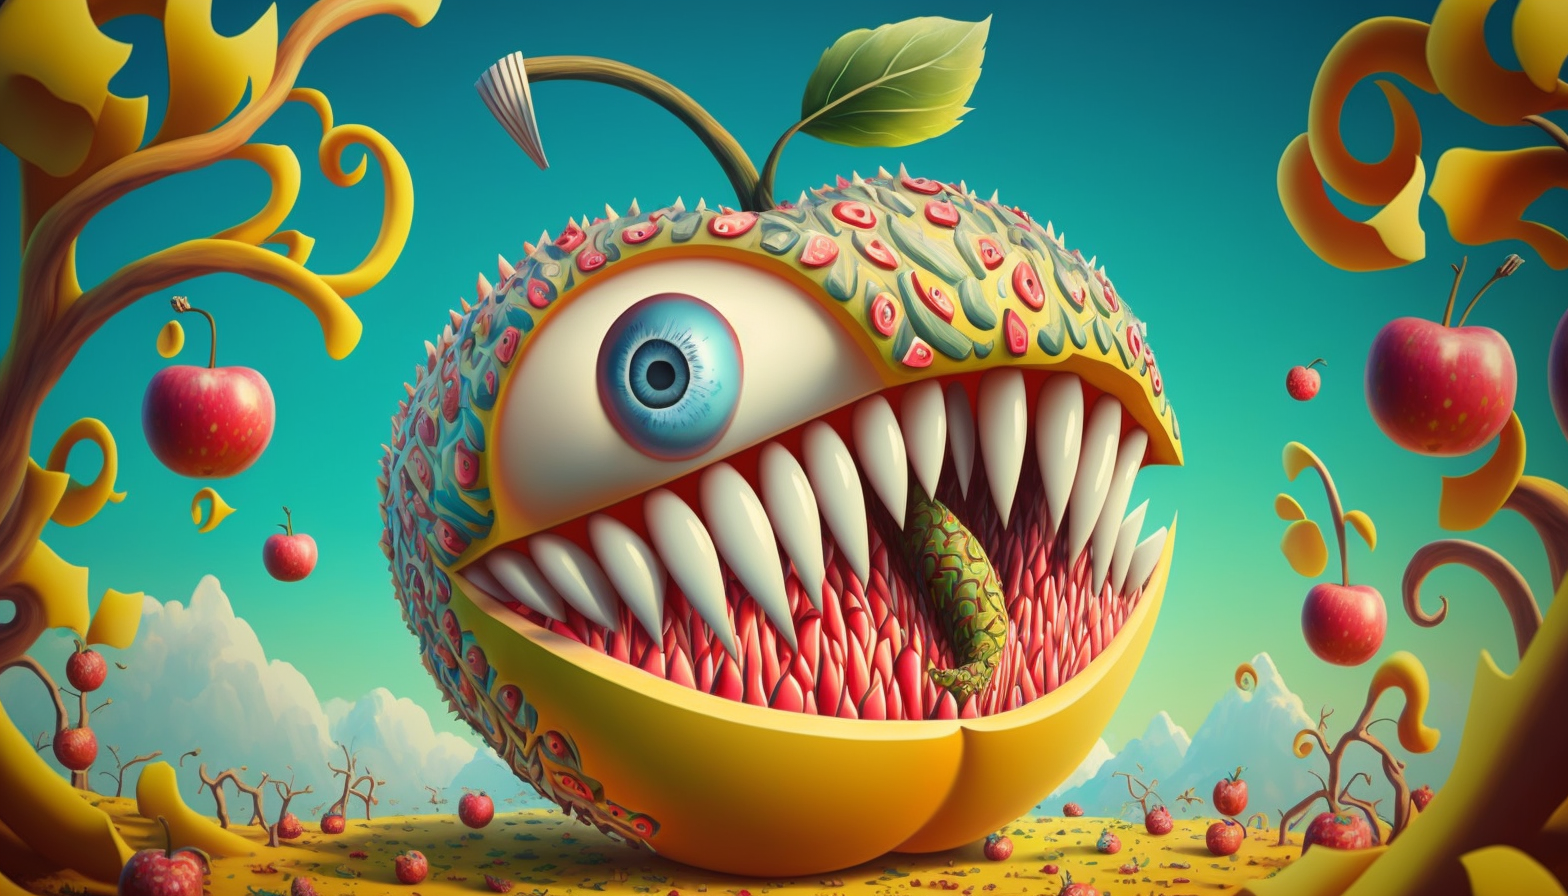 ManiKFox_a_whimsical_apple_with_big_eyes_eating_a_banana_vibran_b30e038a-938d-4cc9-b1fb-74174e42674b